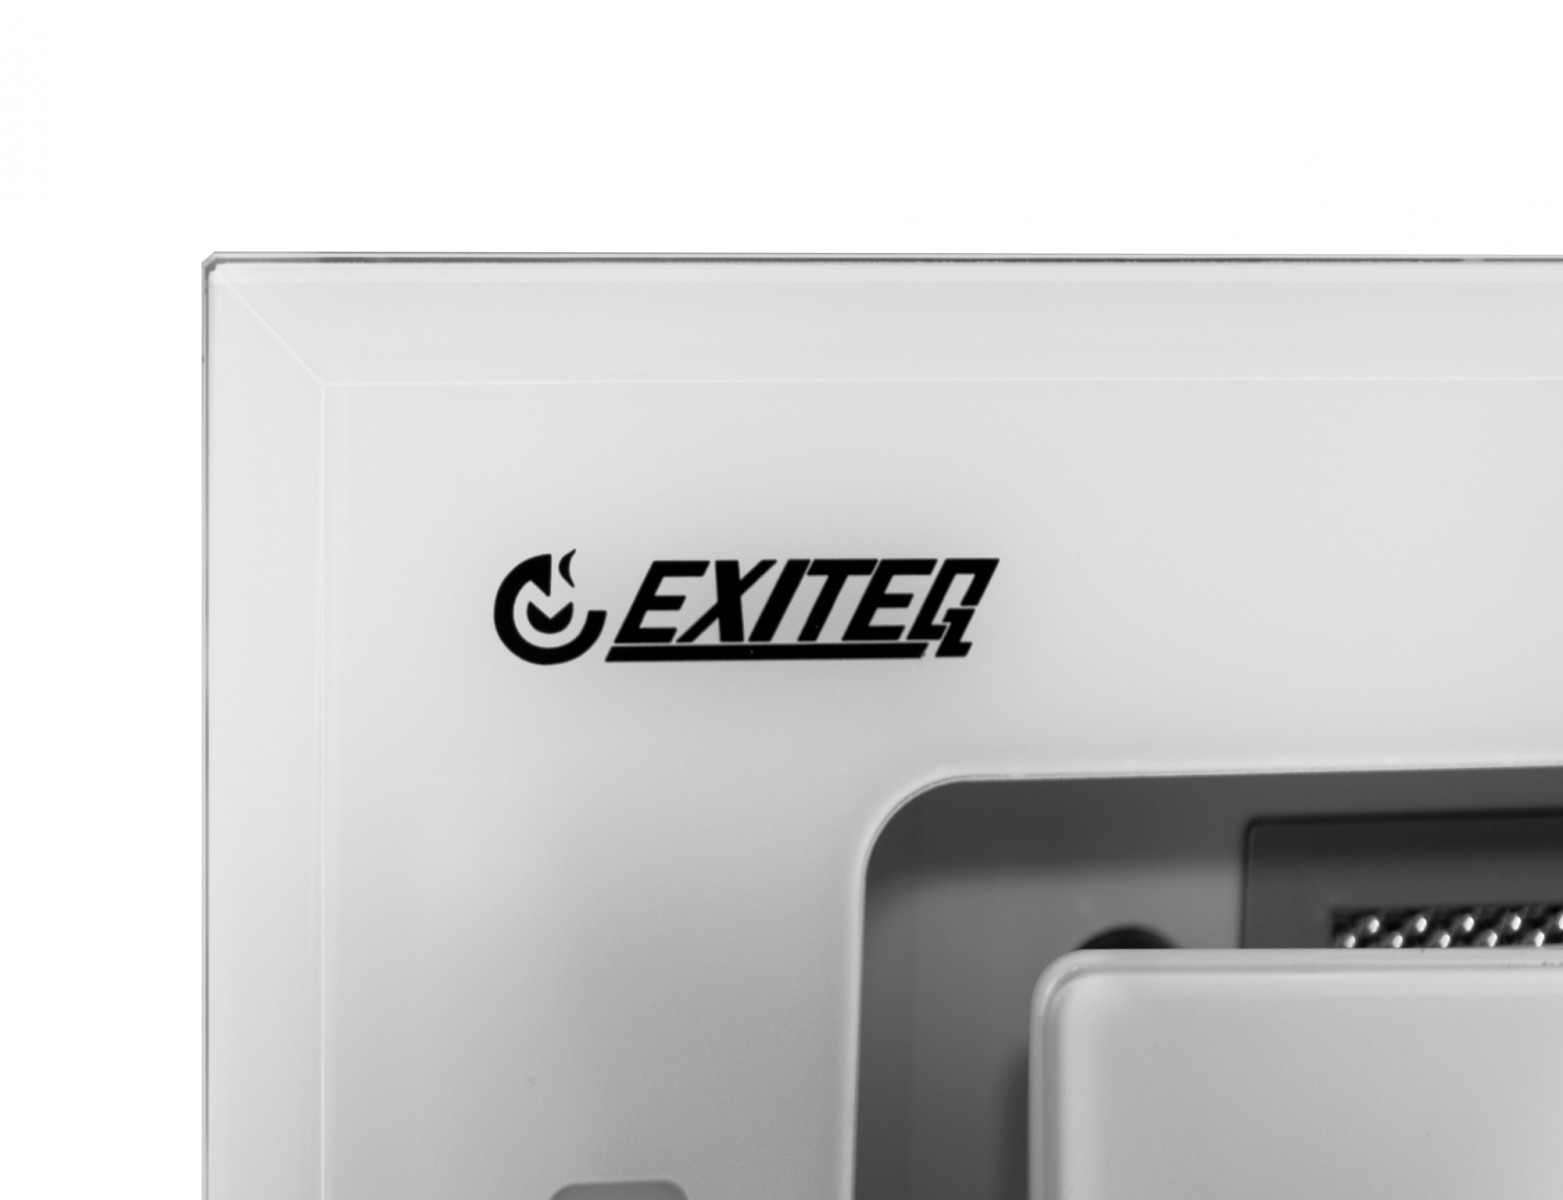 Вытяжка встраиваемая в шкаф 60 см Exiteq ex 1236 White (e10139)